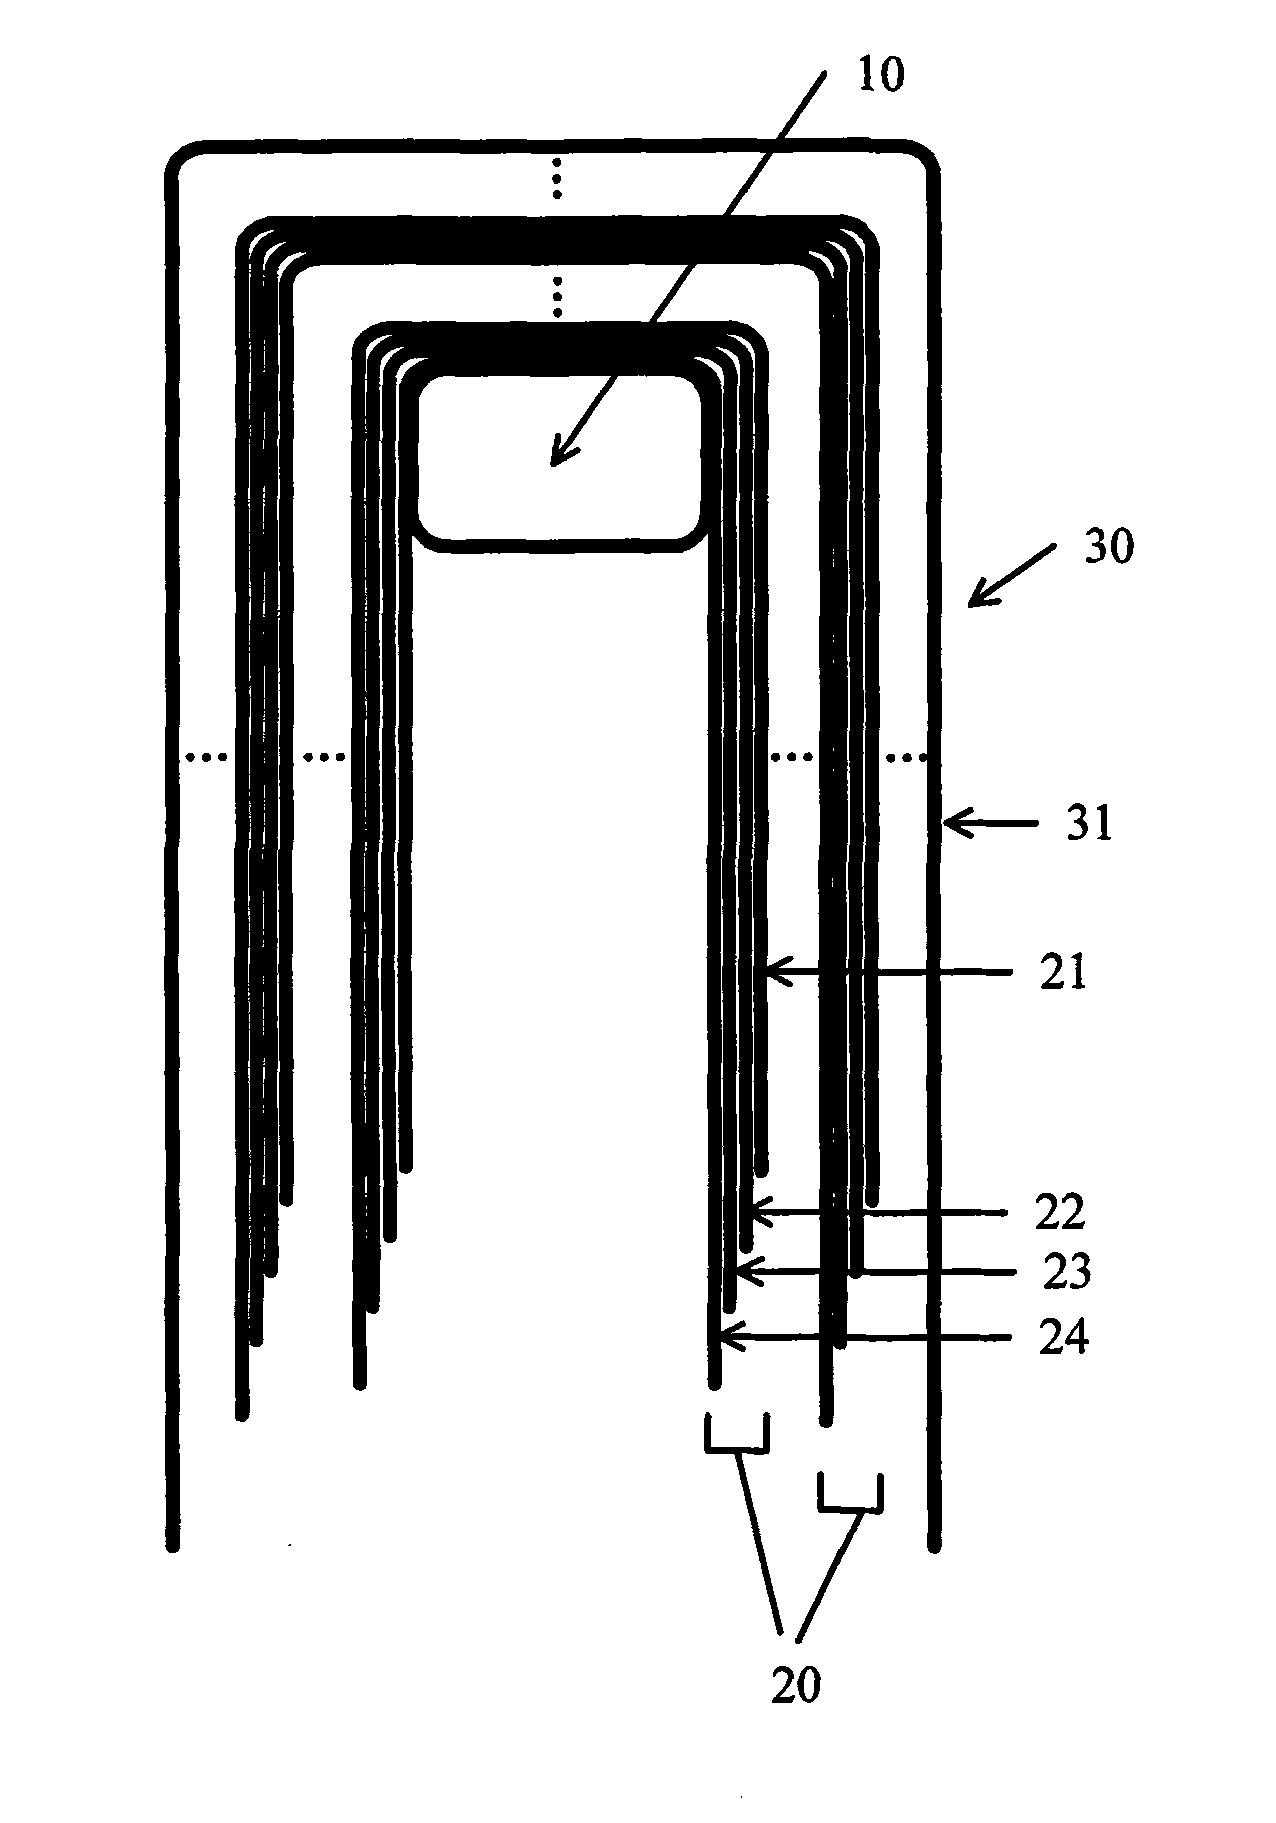 Manufacturing method of amorphous alloy iron cores